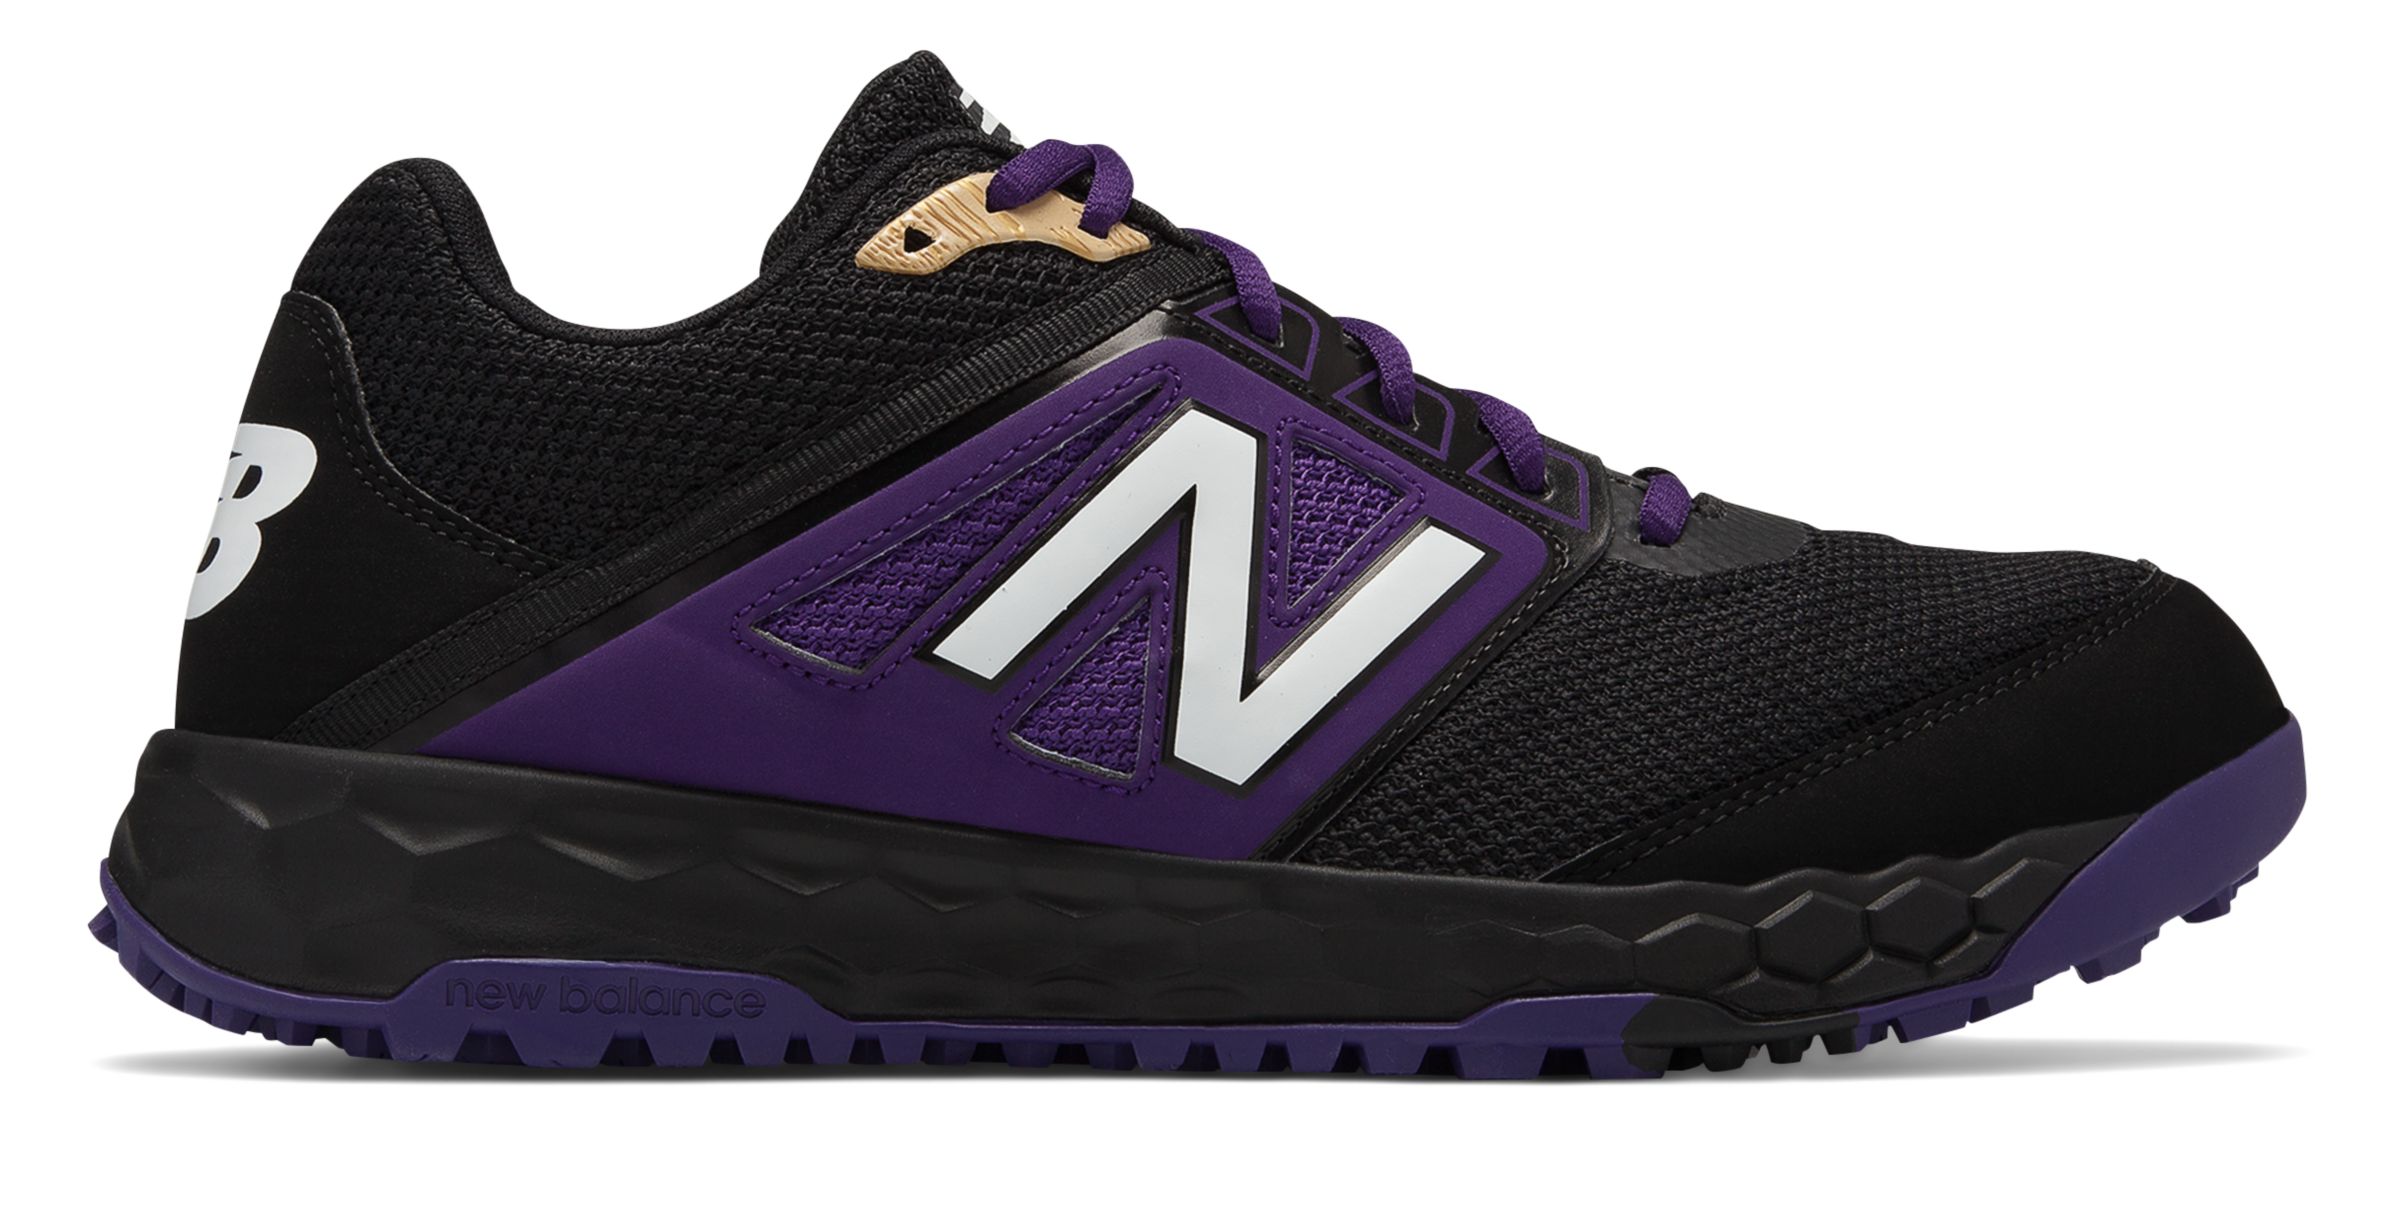 purple turf shoes